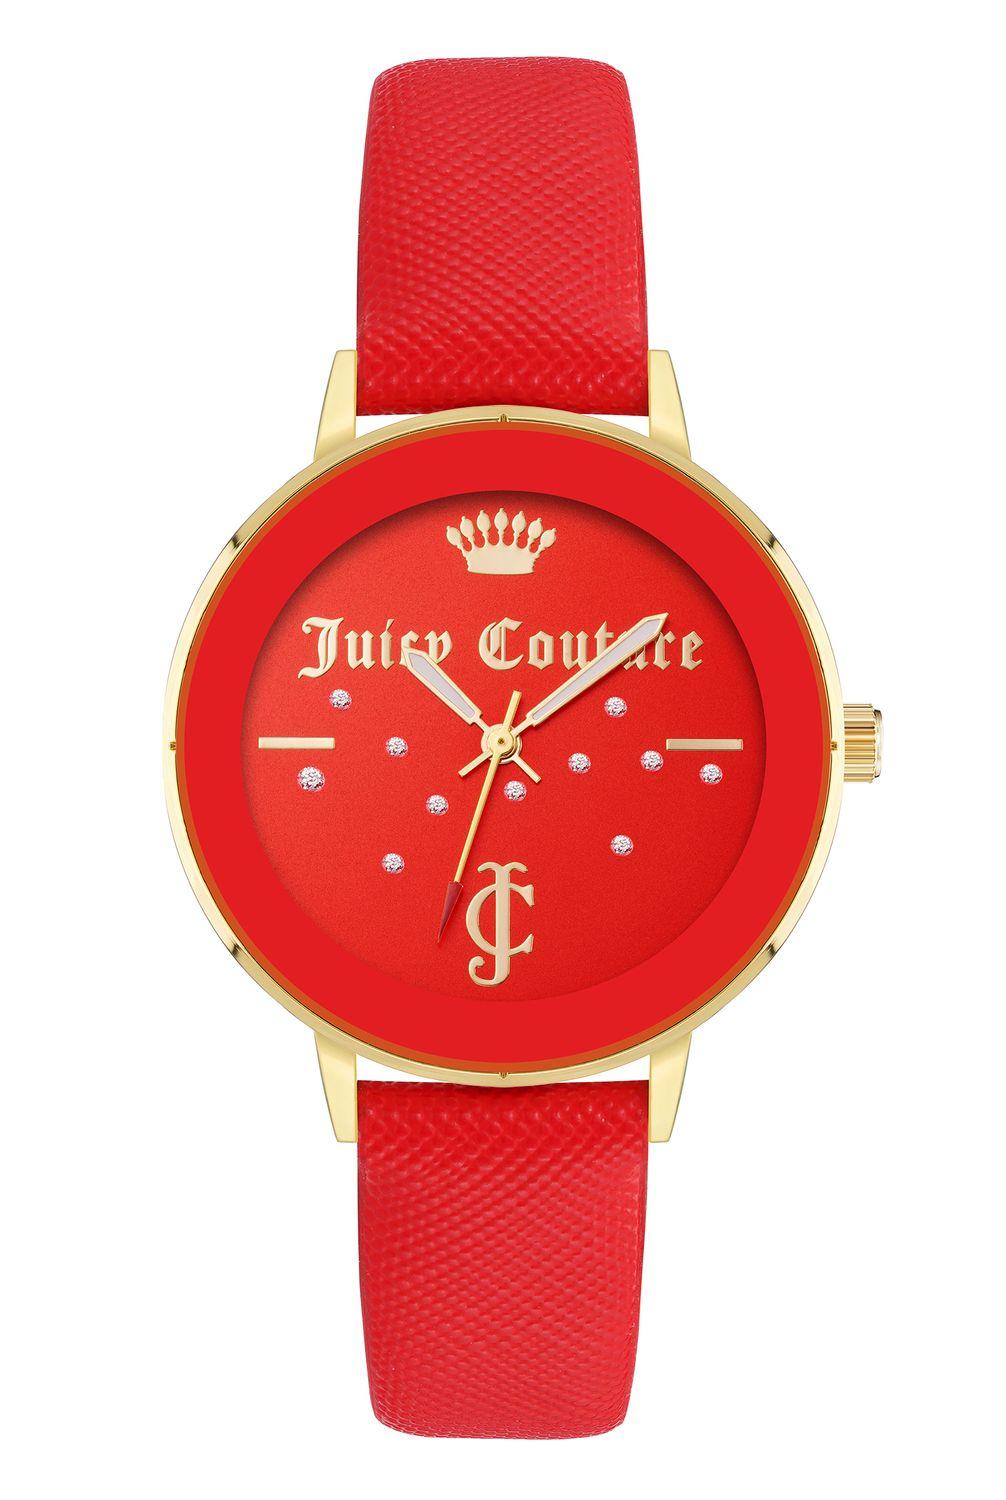 Juicy Couture Black Label Wrist Watch~NEW~Multicolor  Rhinestones~JC/1227SVSV | eBay